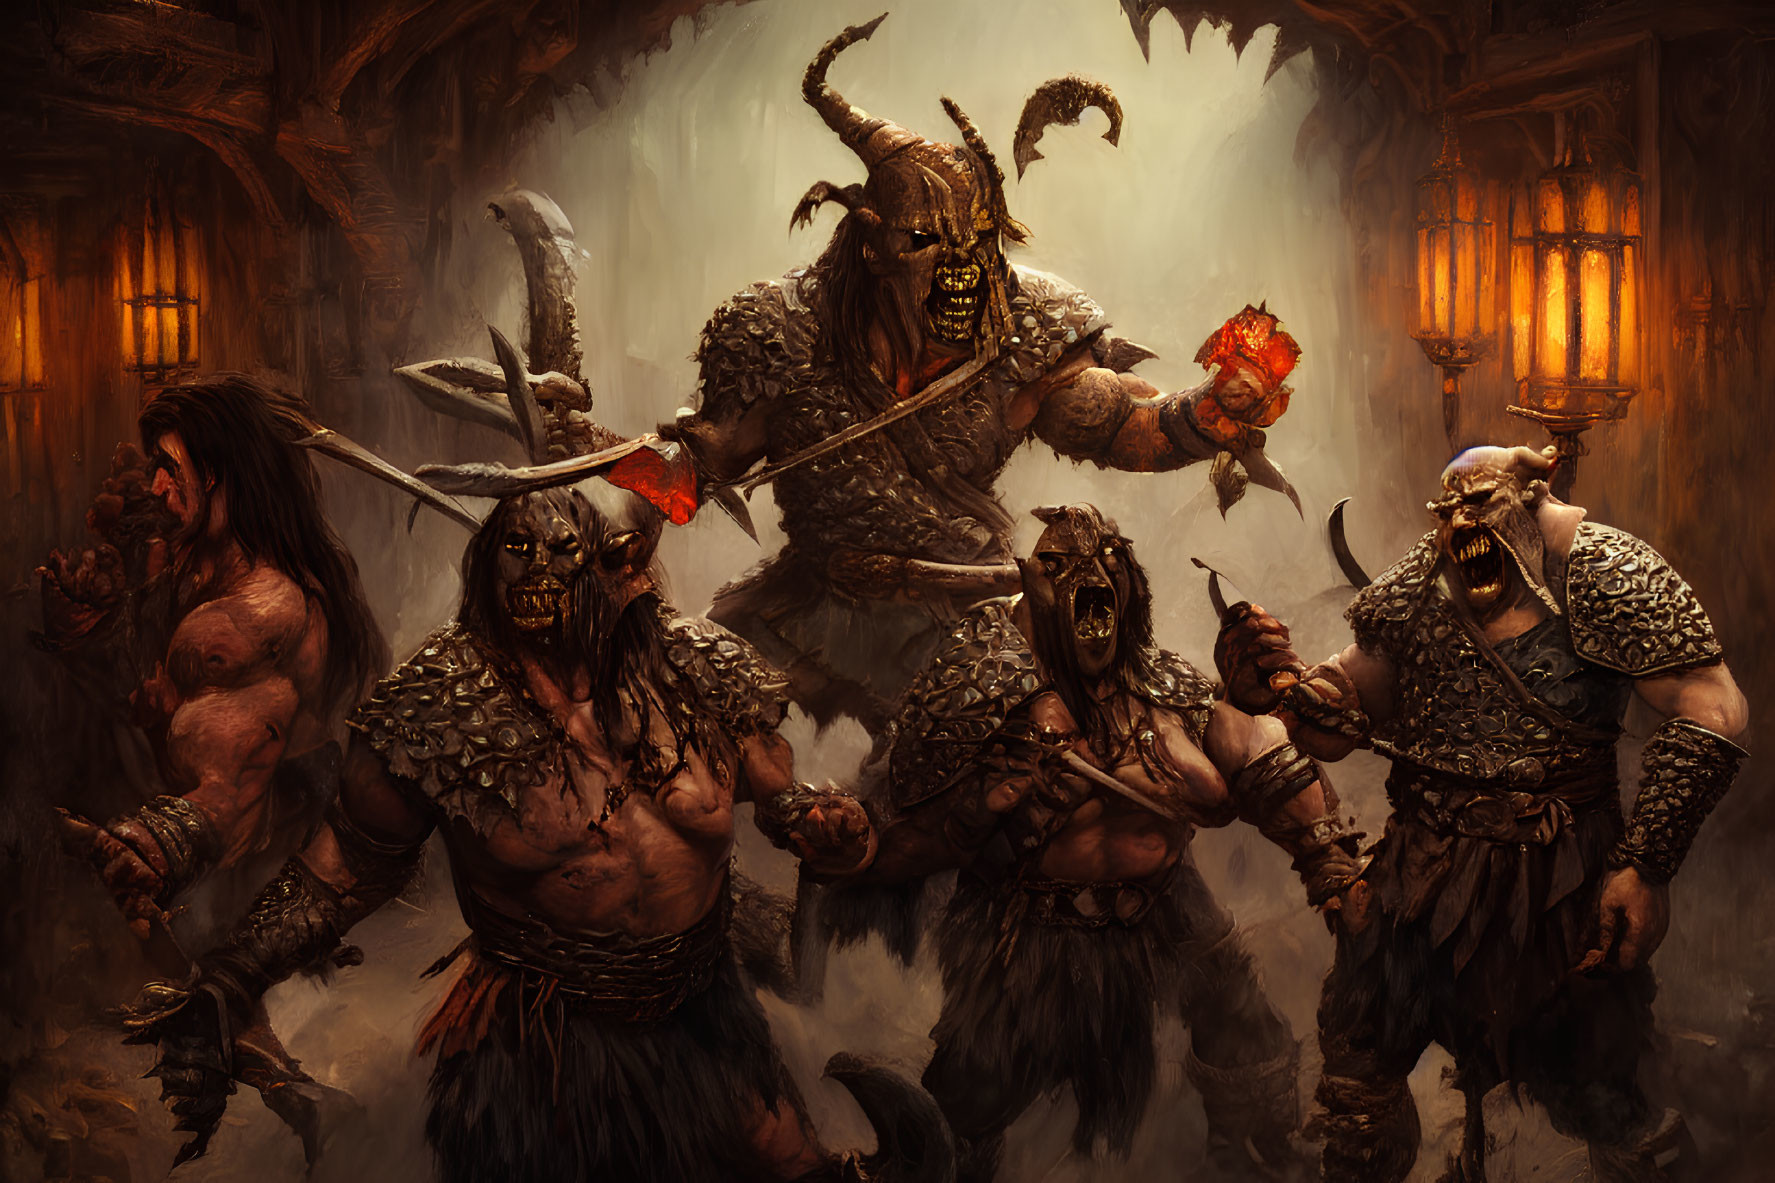 Menacing fantasy orcs armed for battle in torch-lit setting